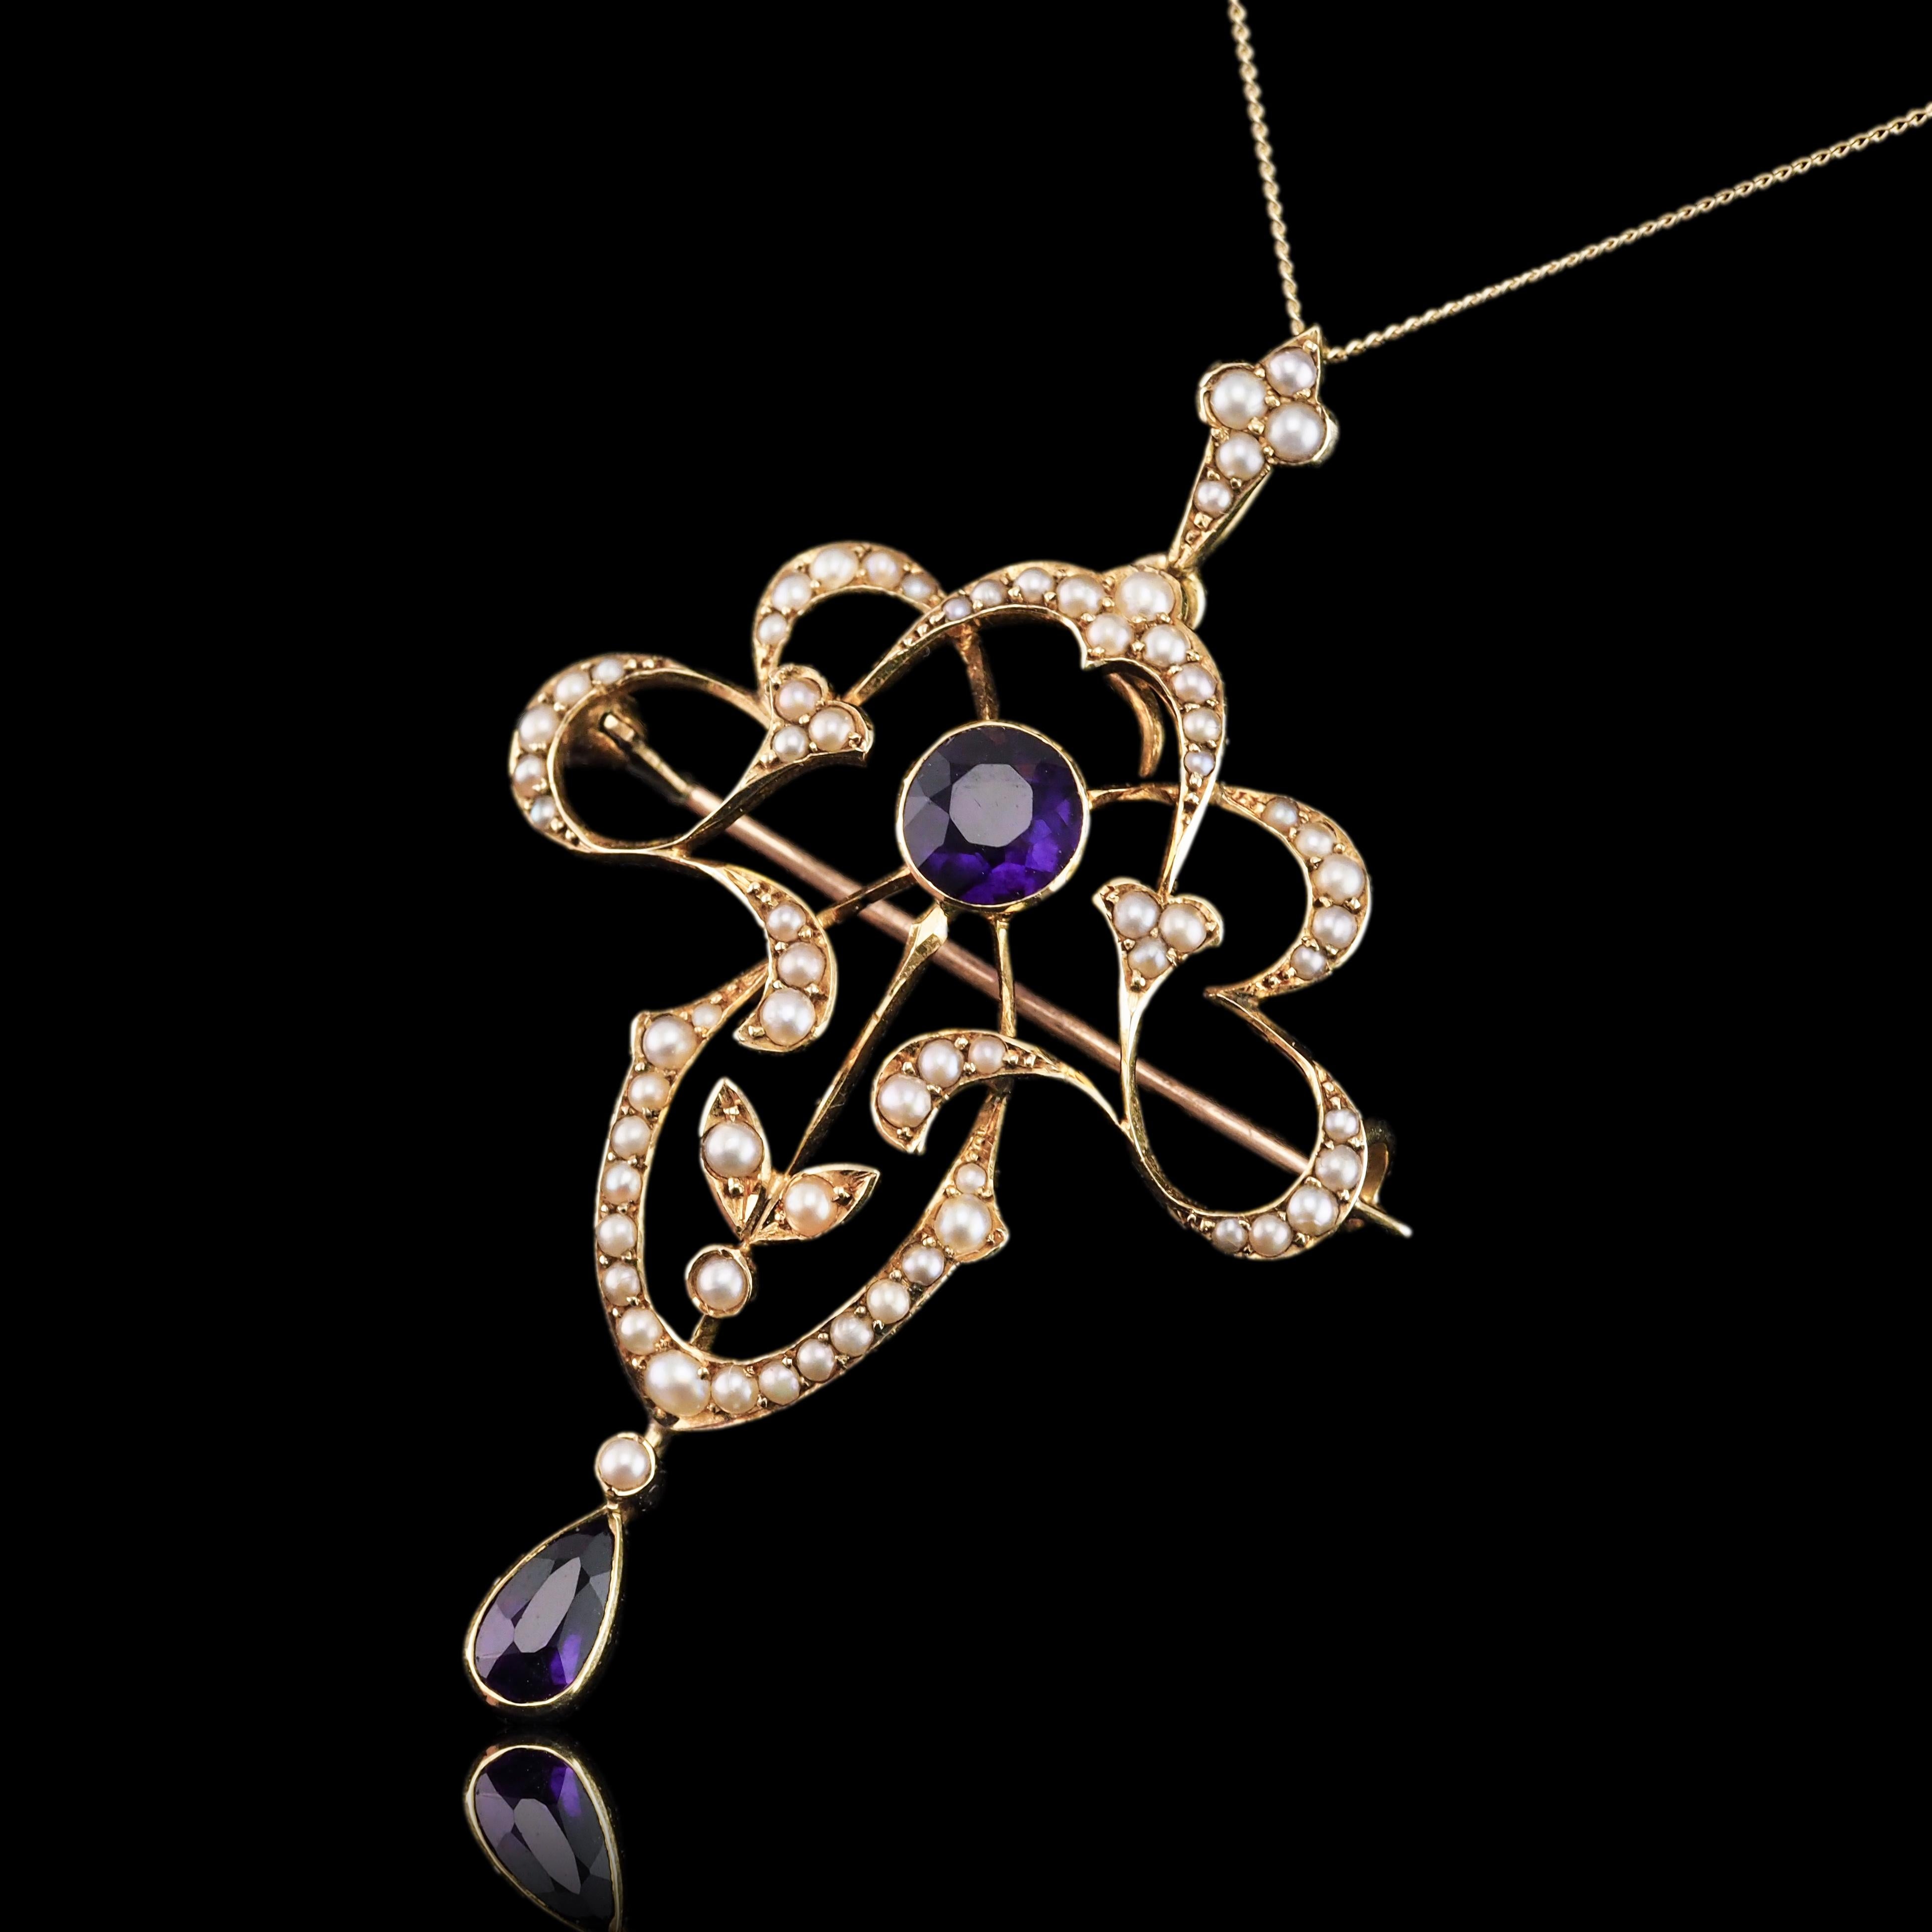 Antique Edwardian Amethyst & Seed Pearl 15K Gold Pendant Necklace Art Nouveau  For Sale 11